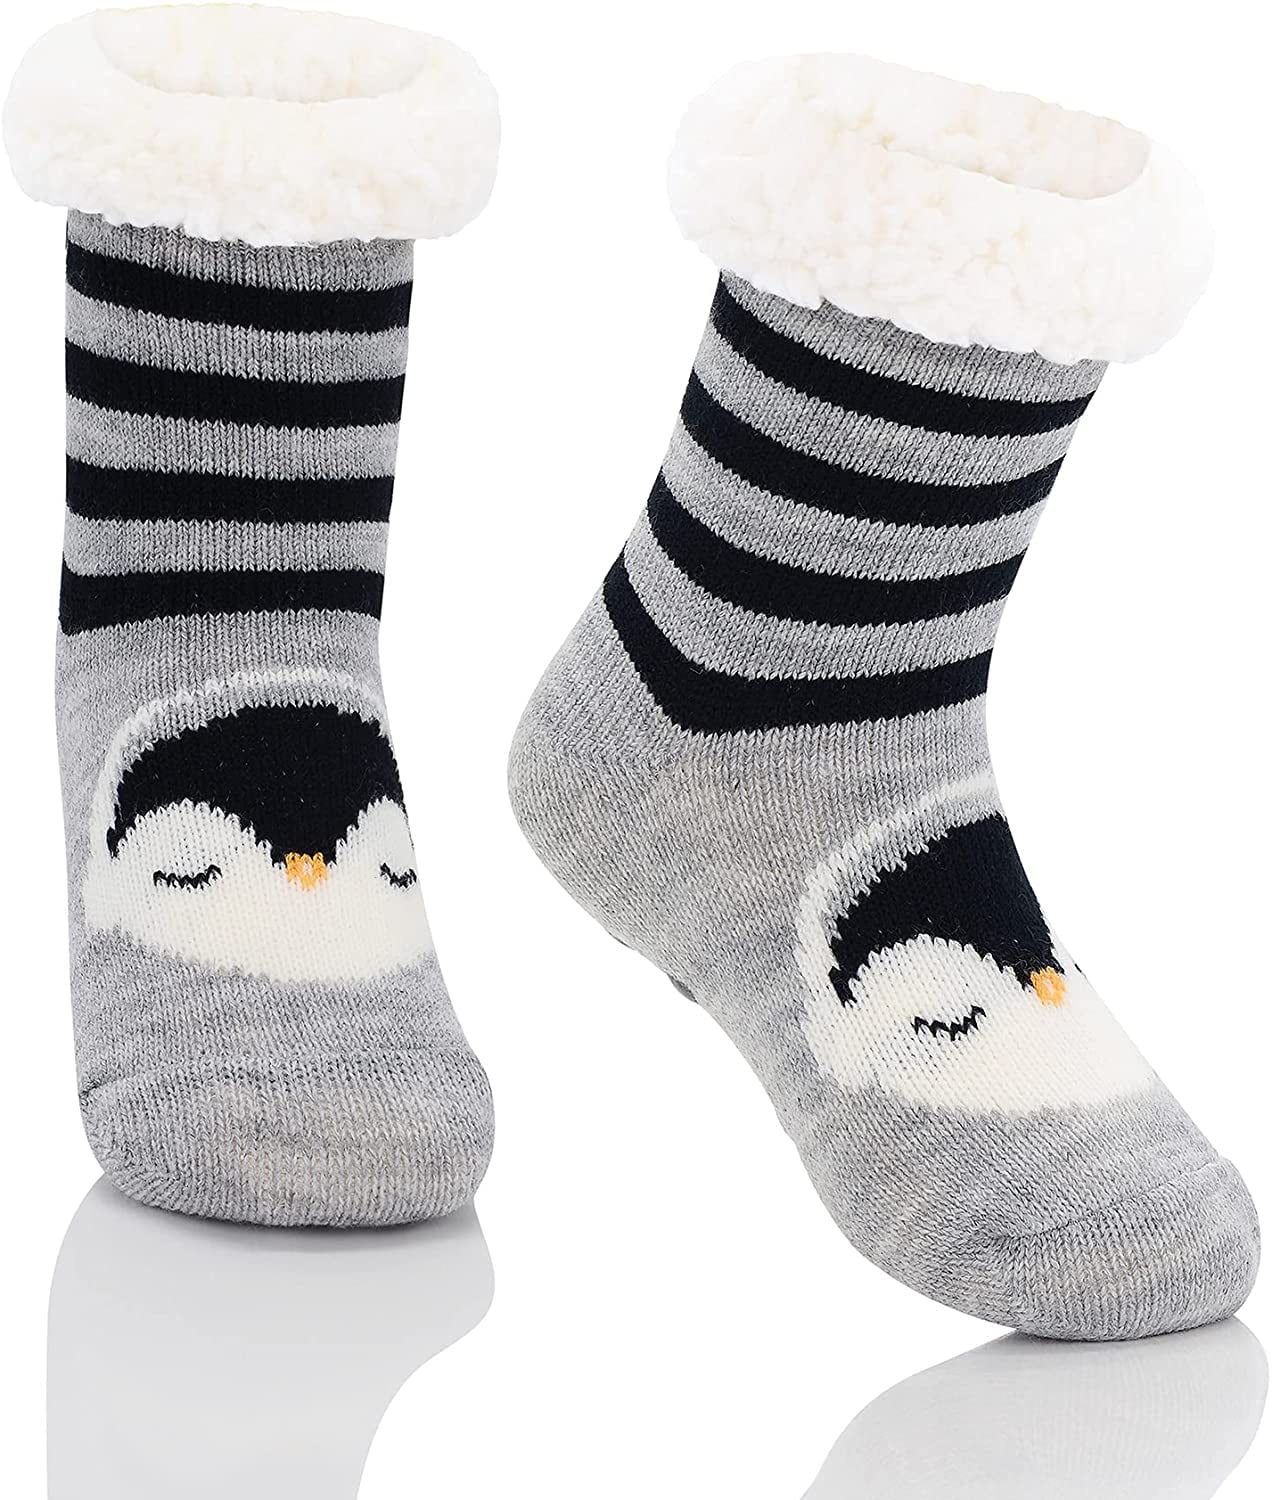 Children Boys Girls Novelty Space Fuzzy Slipper Socks Soft Winter Warm Non-Skid Thick Fleece Lined Kids Toddlers Socks 